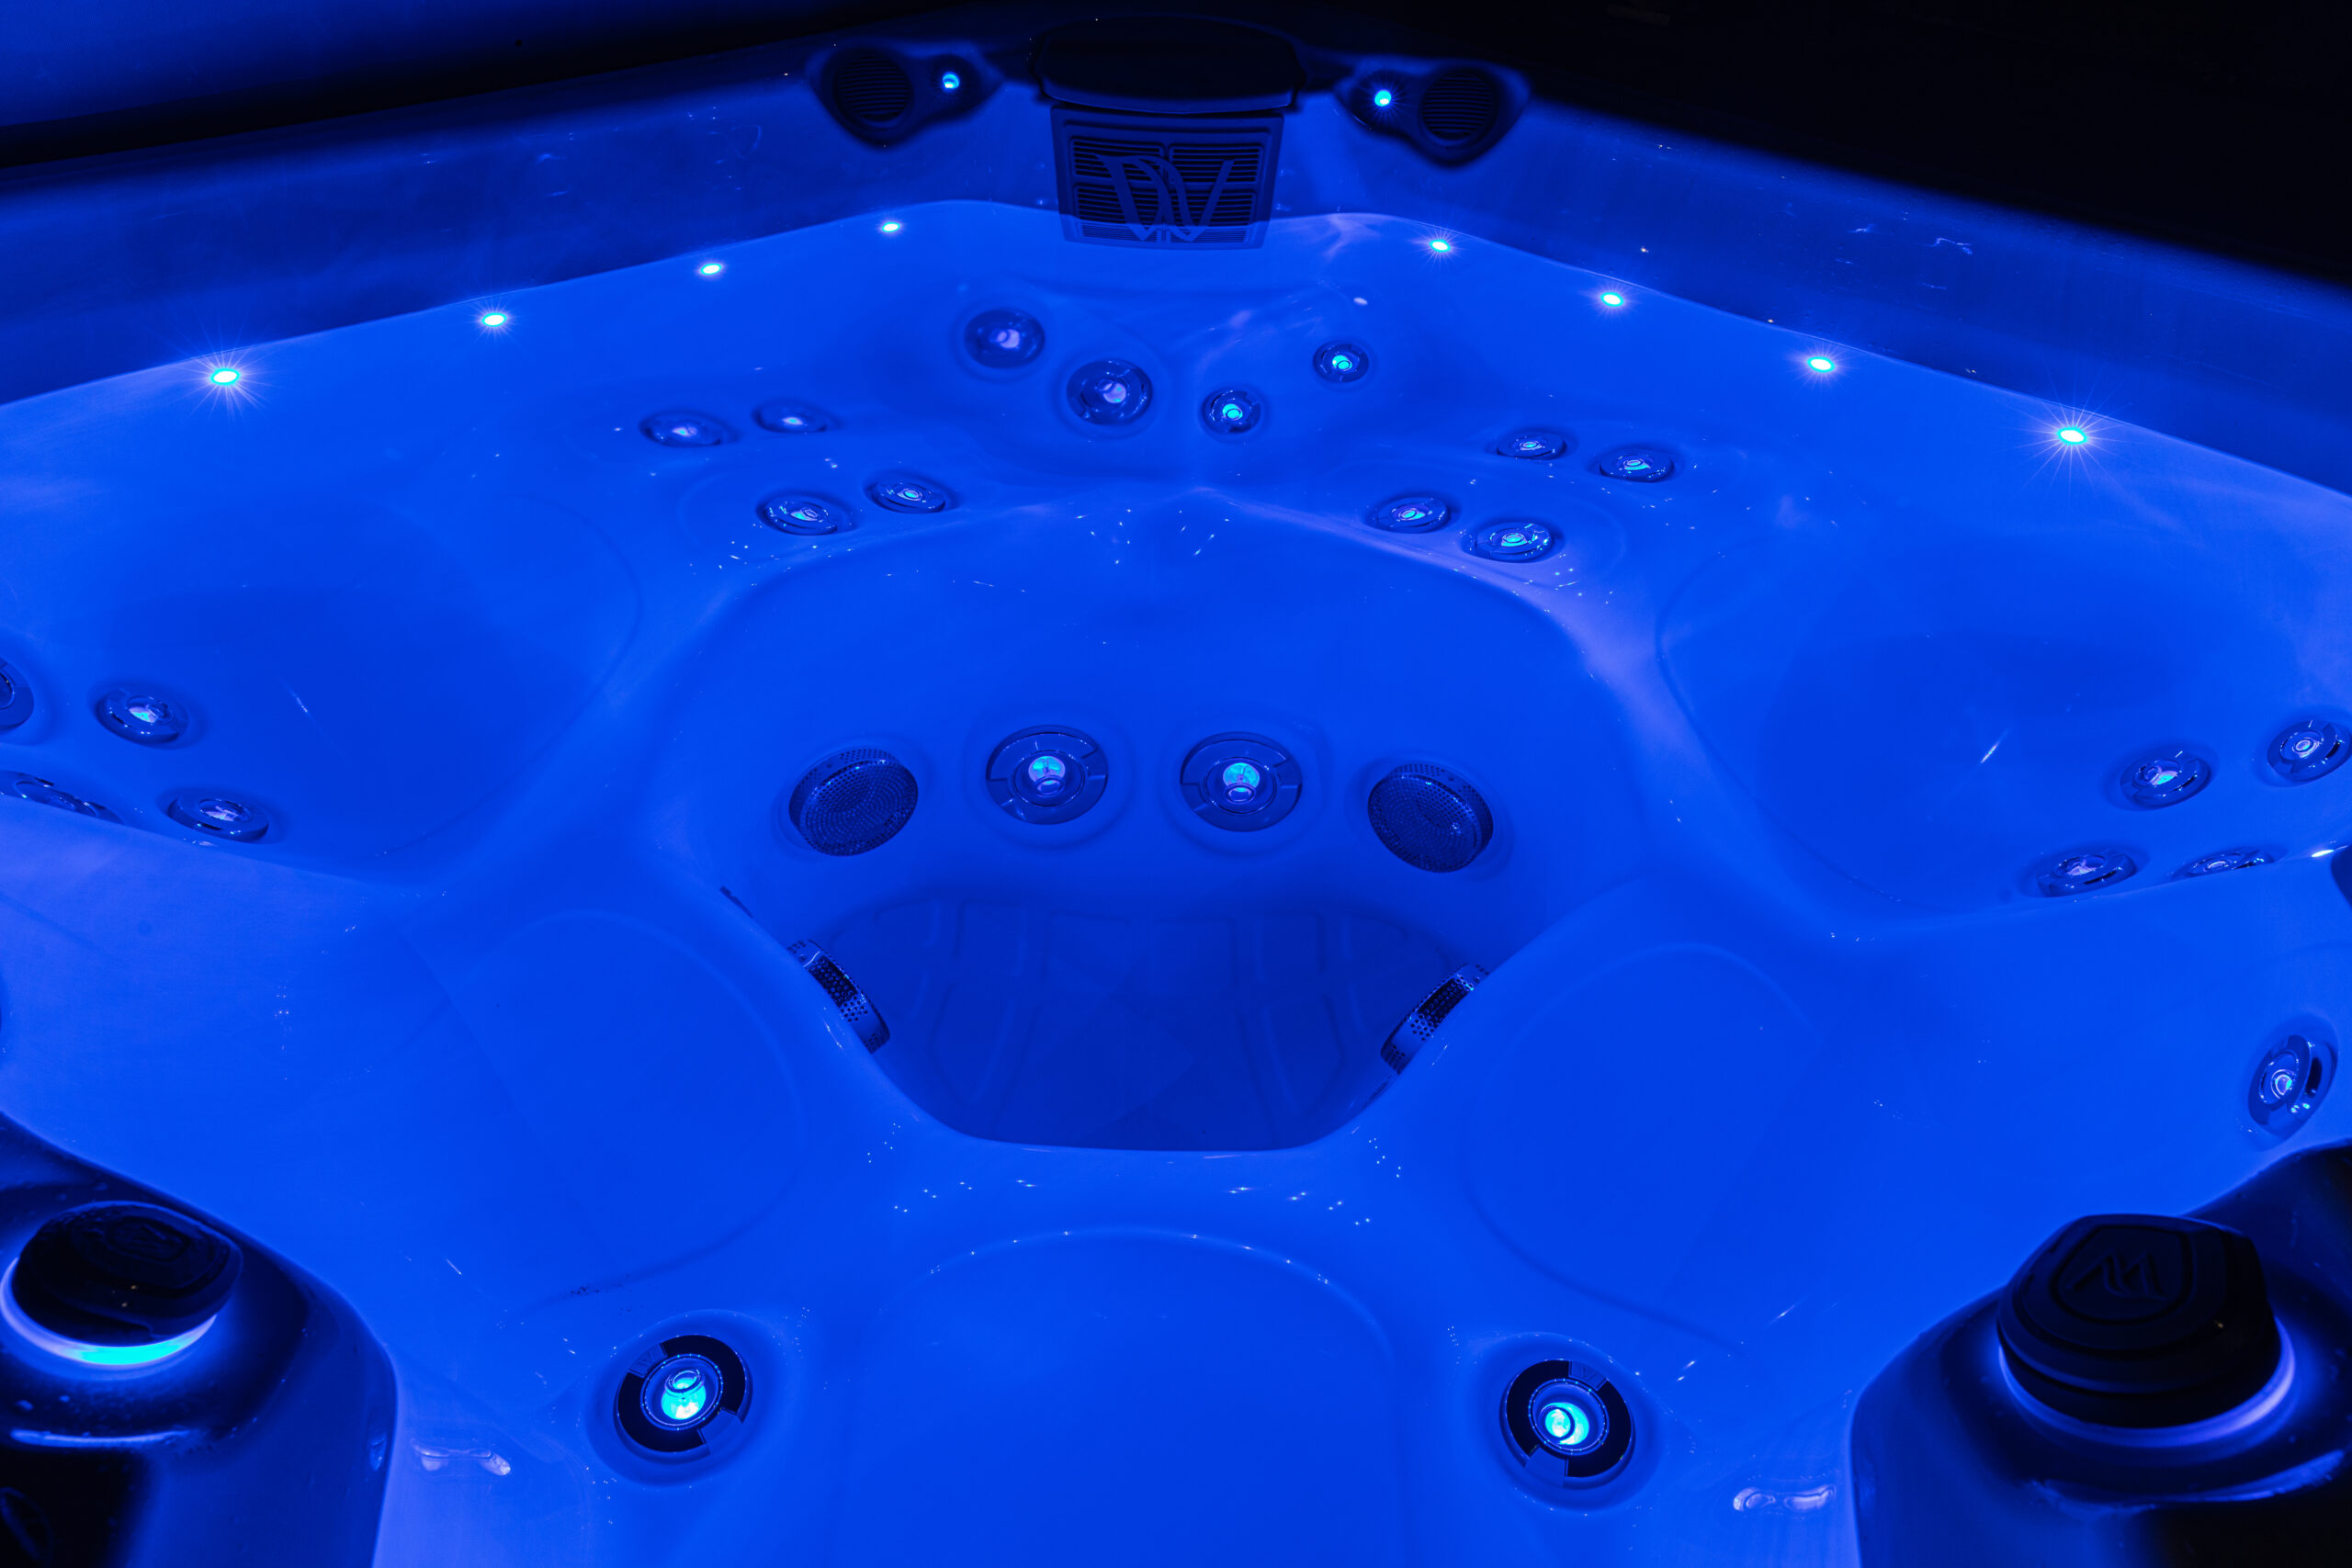 hot tub lighting set to the blue setting